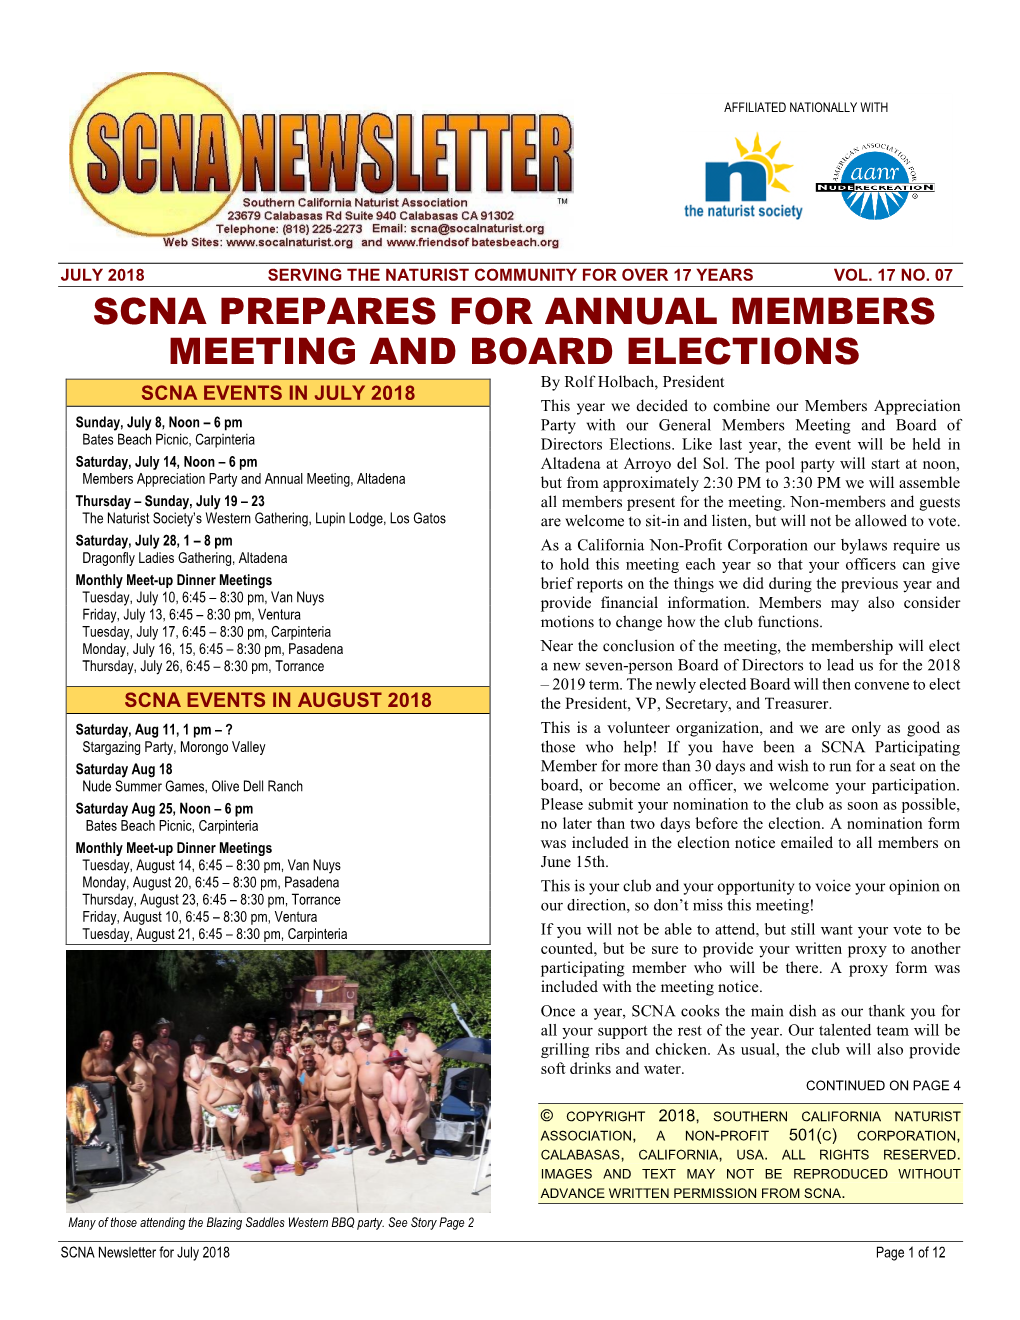 SCNA Newsletter for July 2018